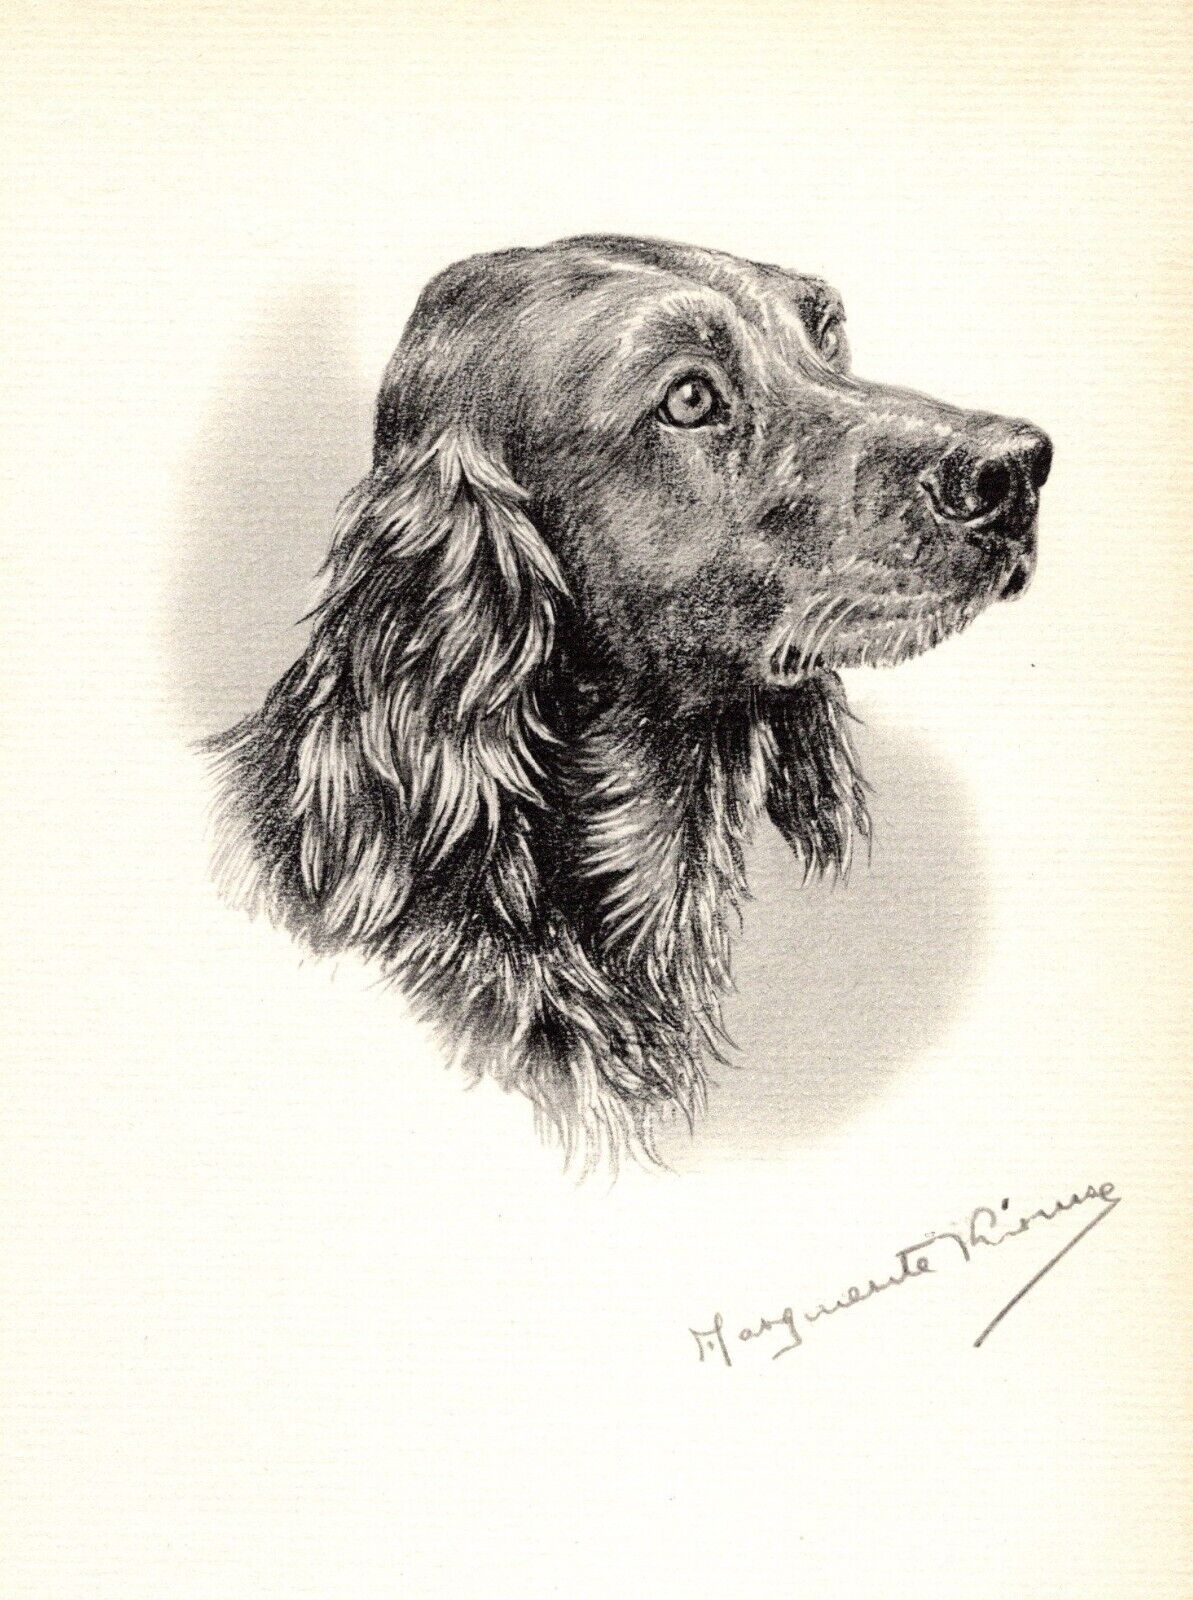 Antique Marguerite Kirmse Irish Setter Print Hunting Dog Wall Art Decor 5027a